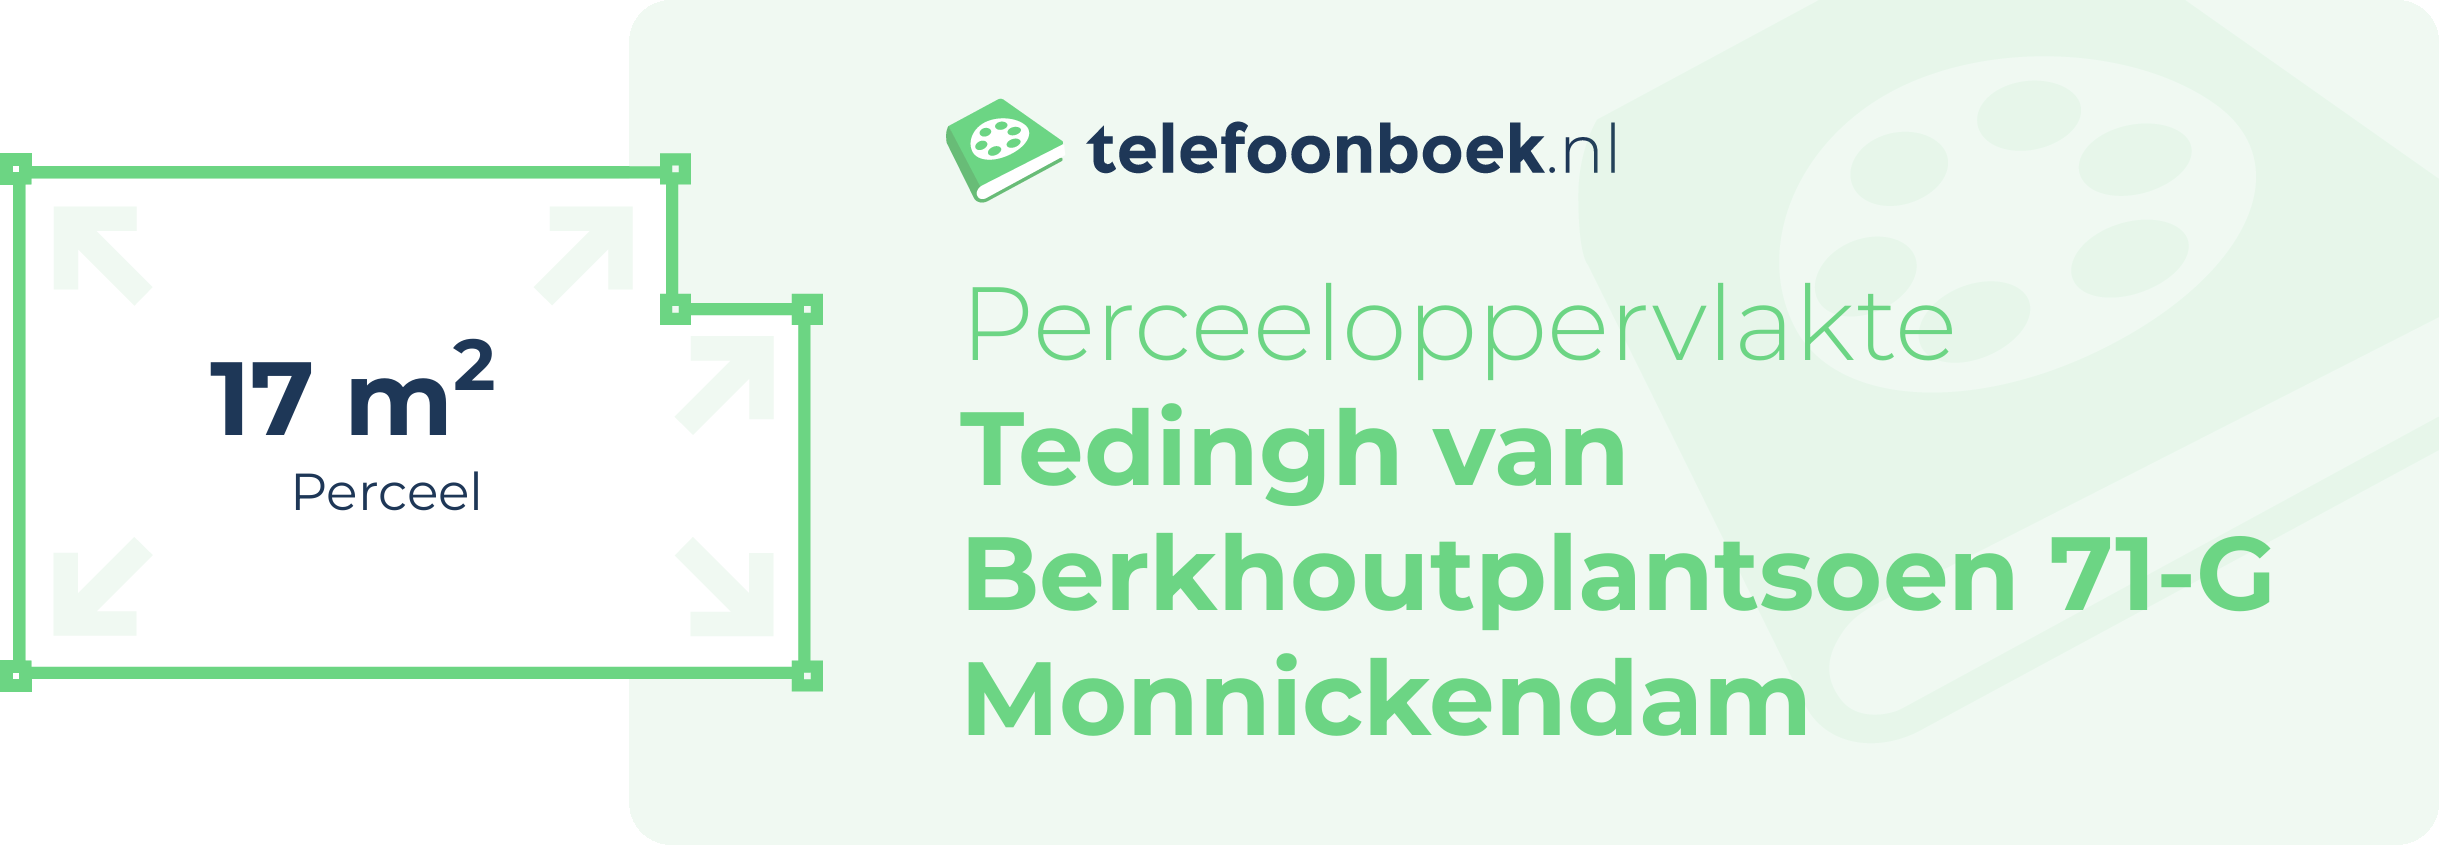 Perceeloppervlakte Tedingh Van Berkhoutplantsoen 71-G Monnickendam